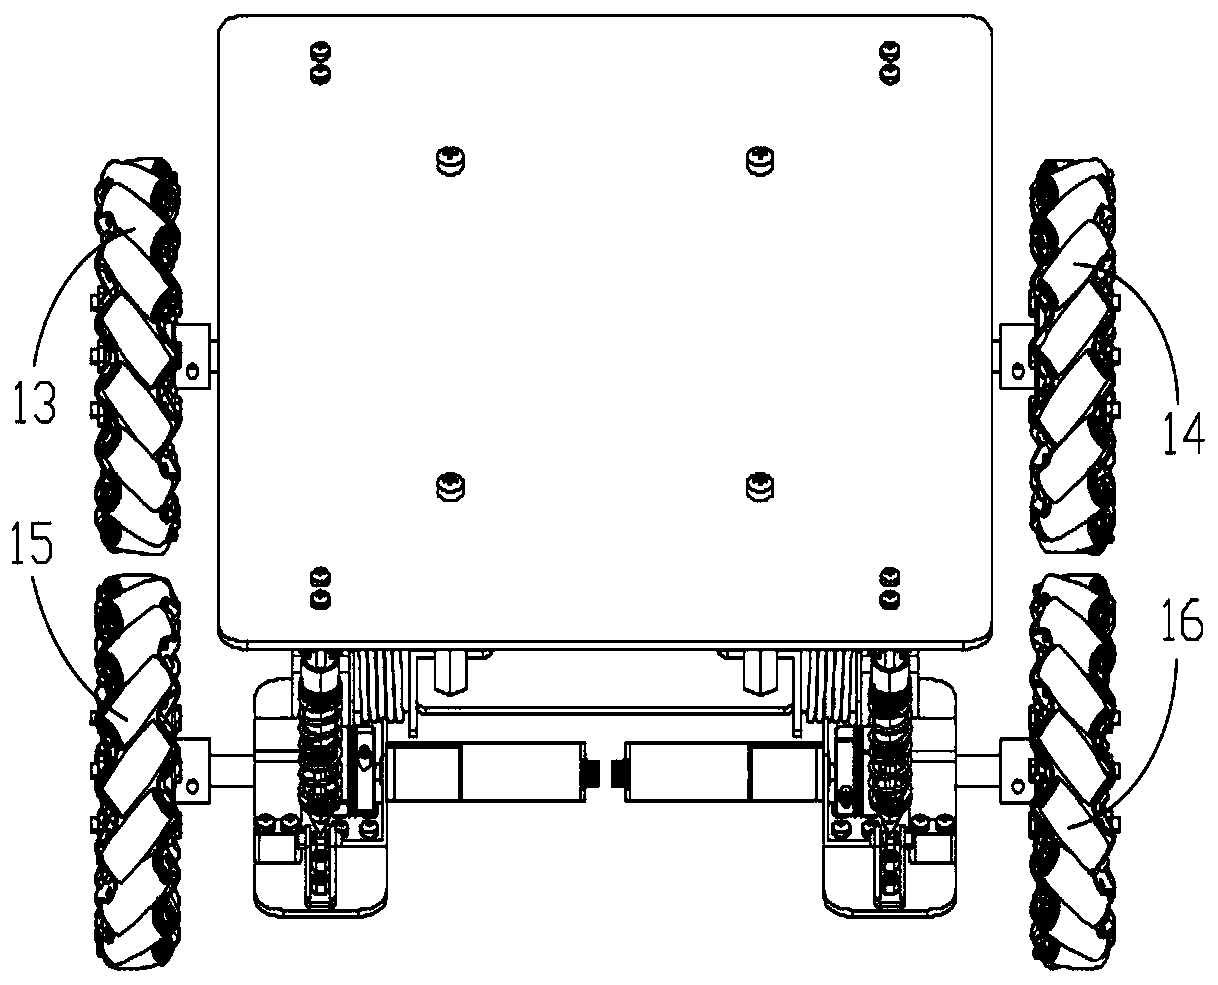 Independent suspension structure of Mecanum wheel omni-directional mobile robot